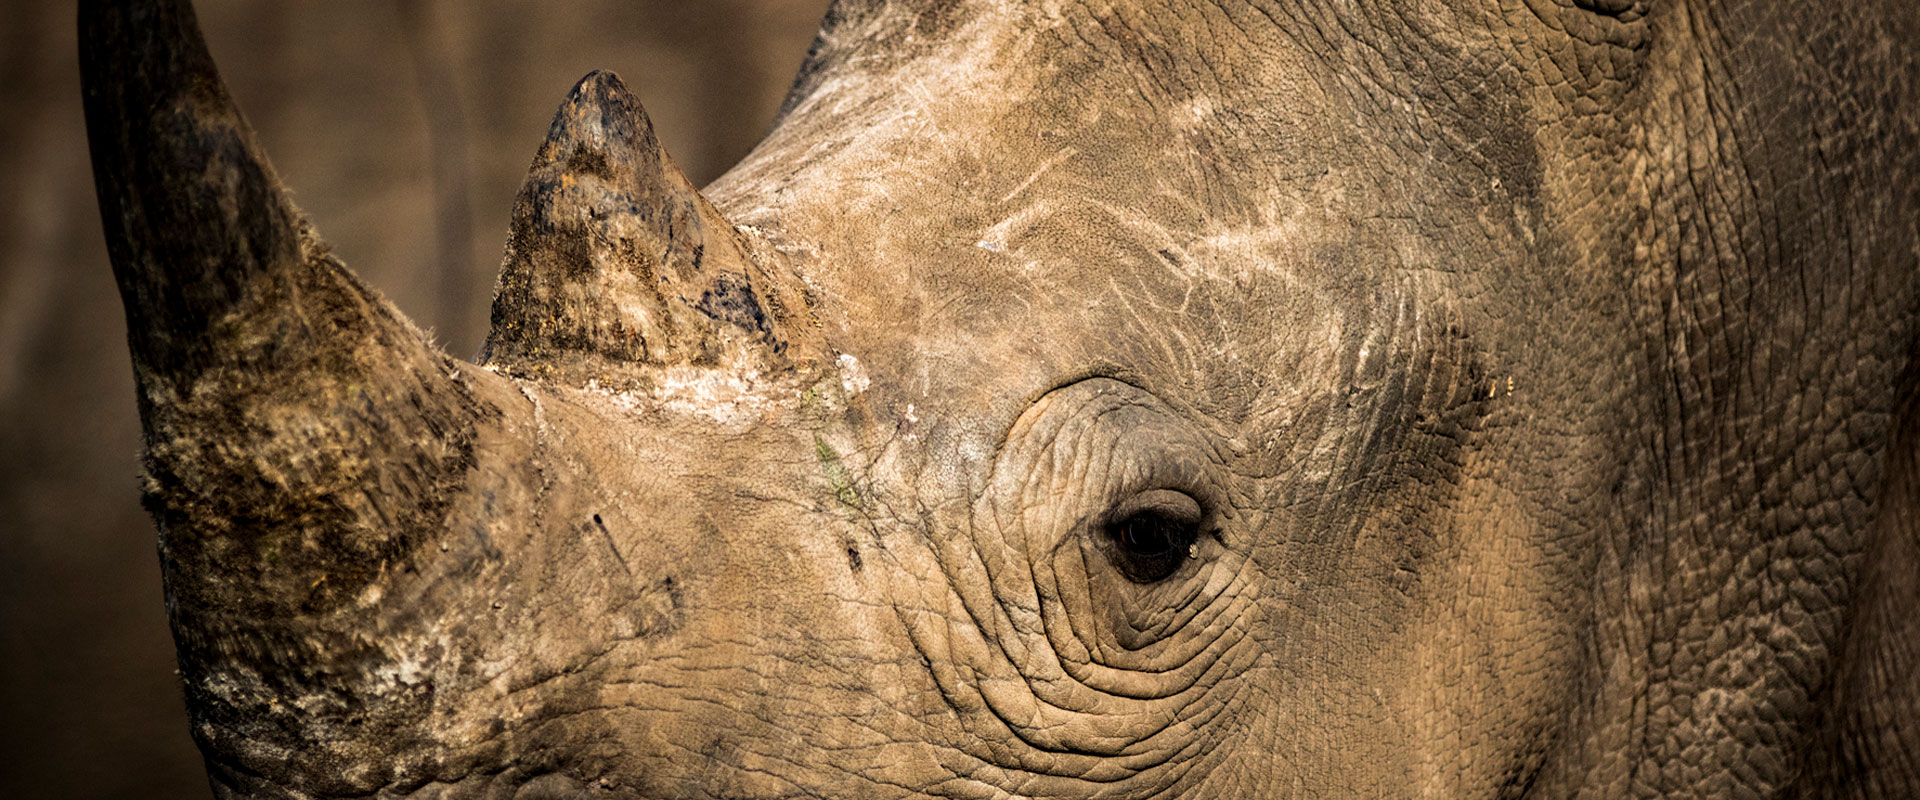 Luxury Safari How We Help Conservation